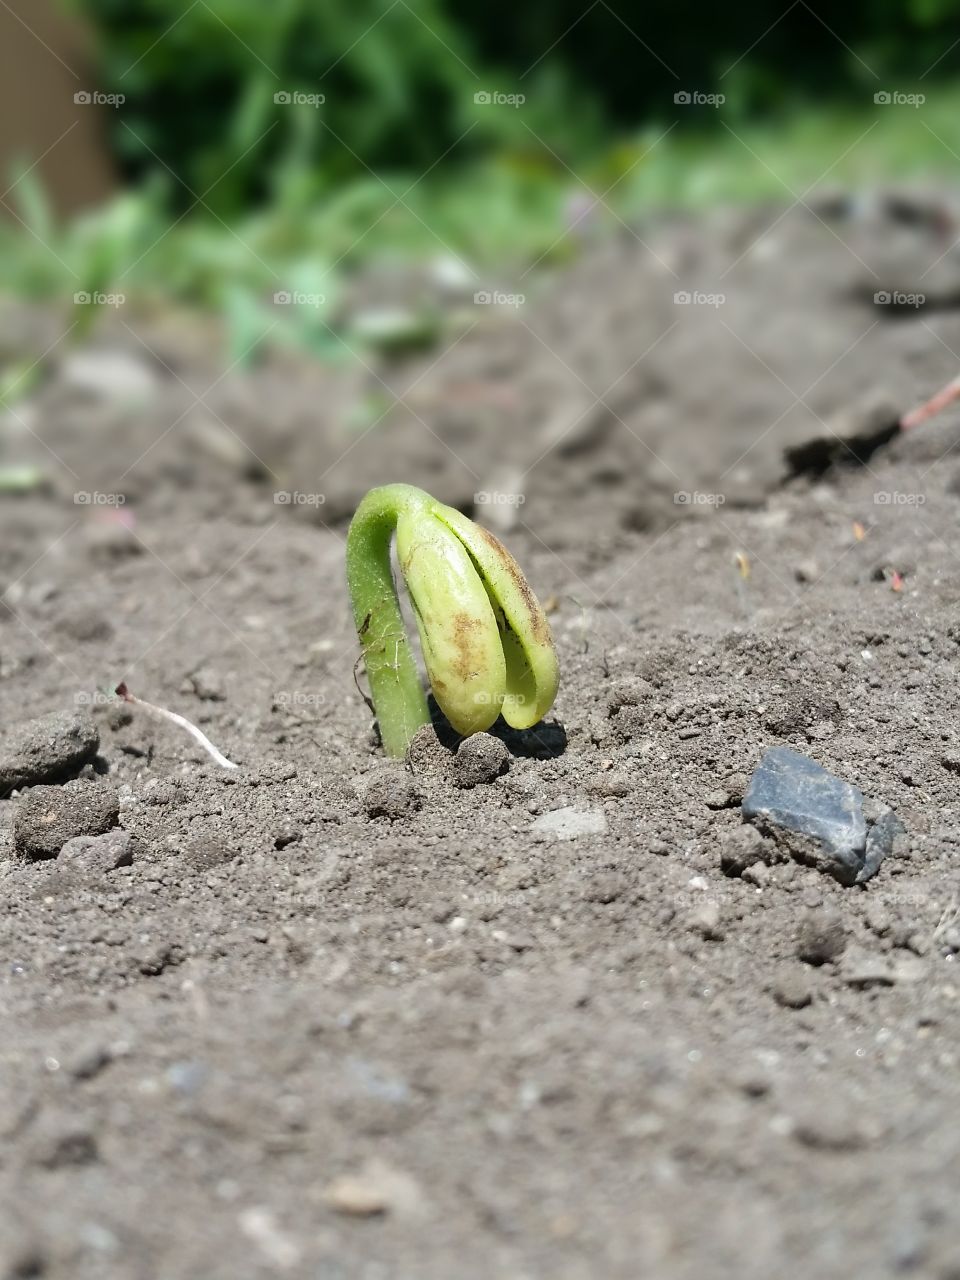 Emerging Seedling